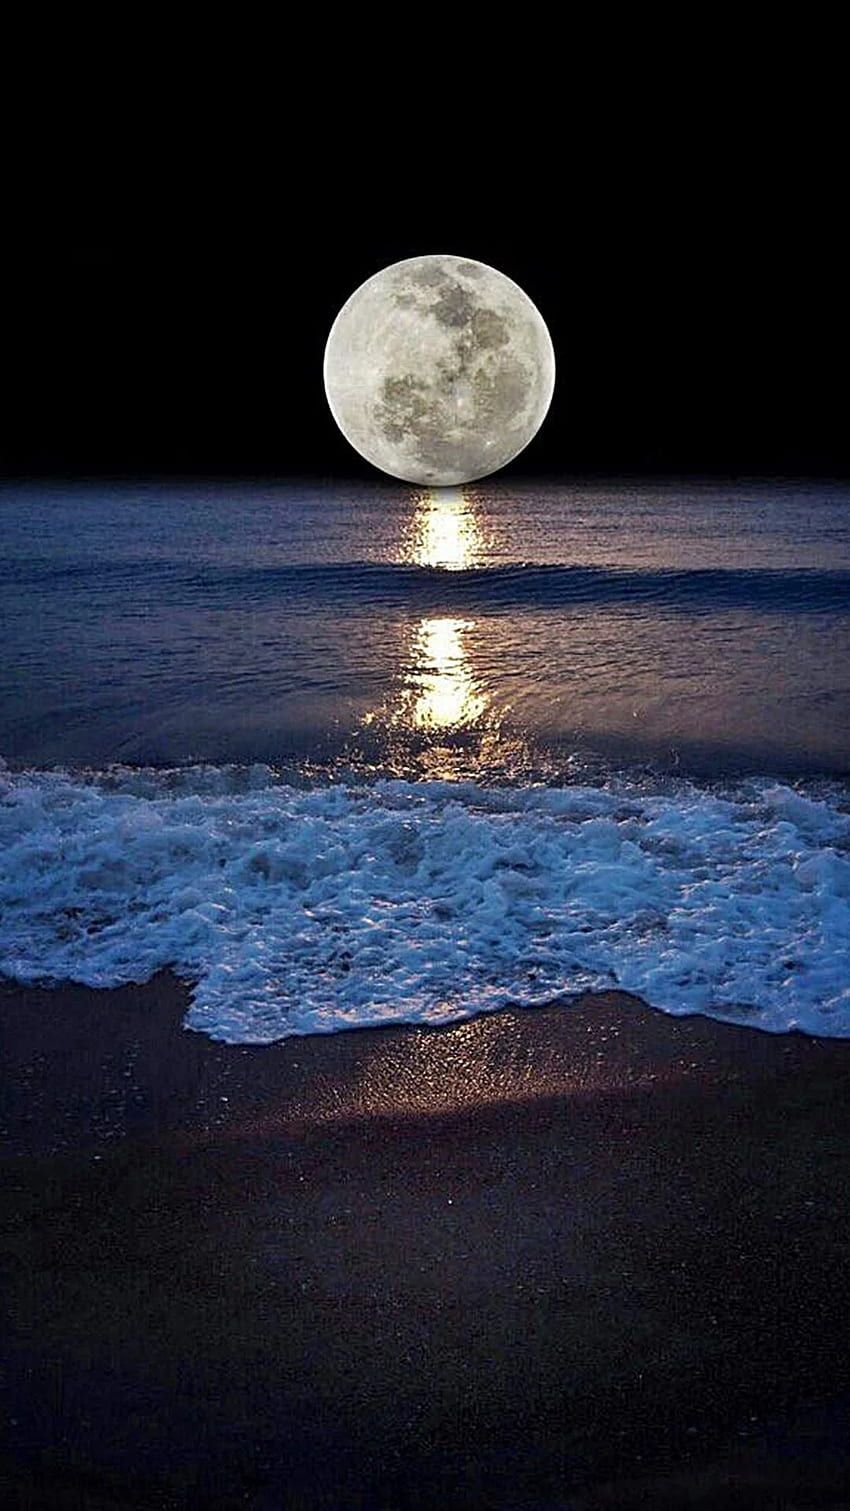 desktop-wallpaper-romantic-full-moon-on-high-quality-iphone-android-romantic-f-in-2020-moon-graphy-beautiful-moon-moon-art-moon-romance.jpg